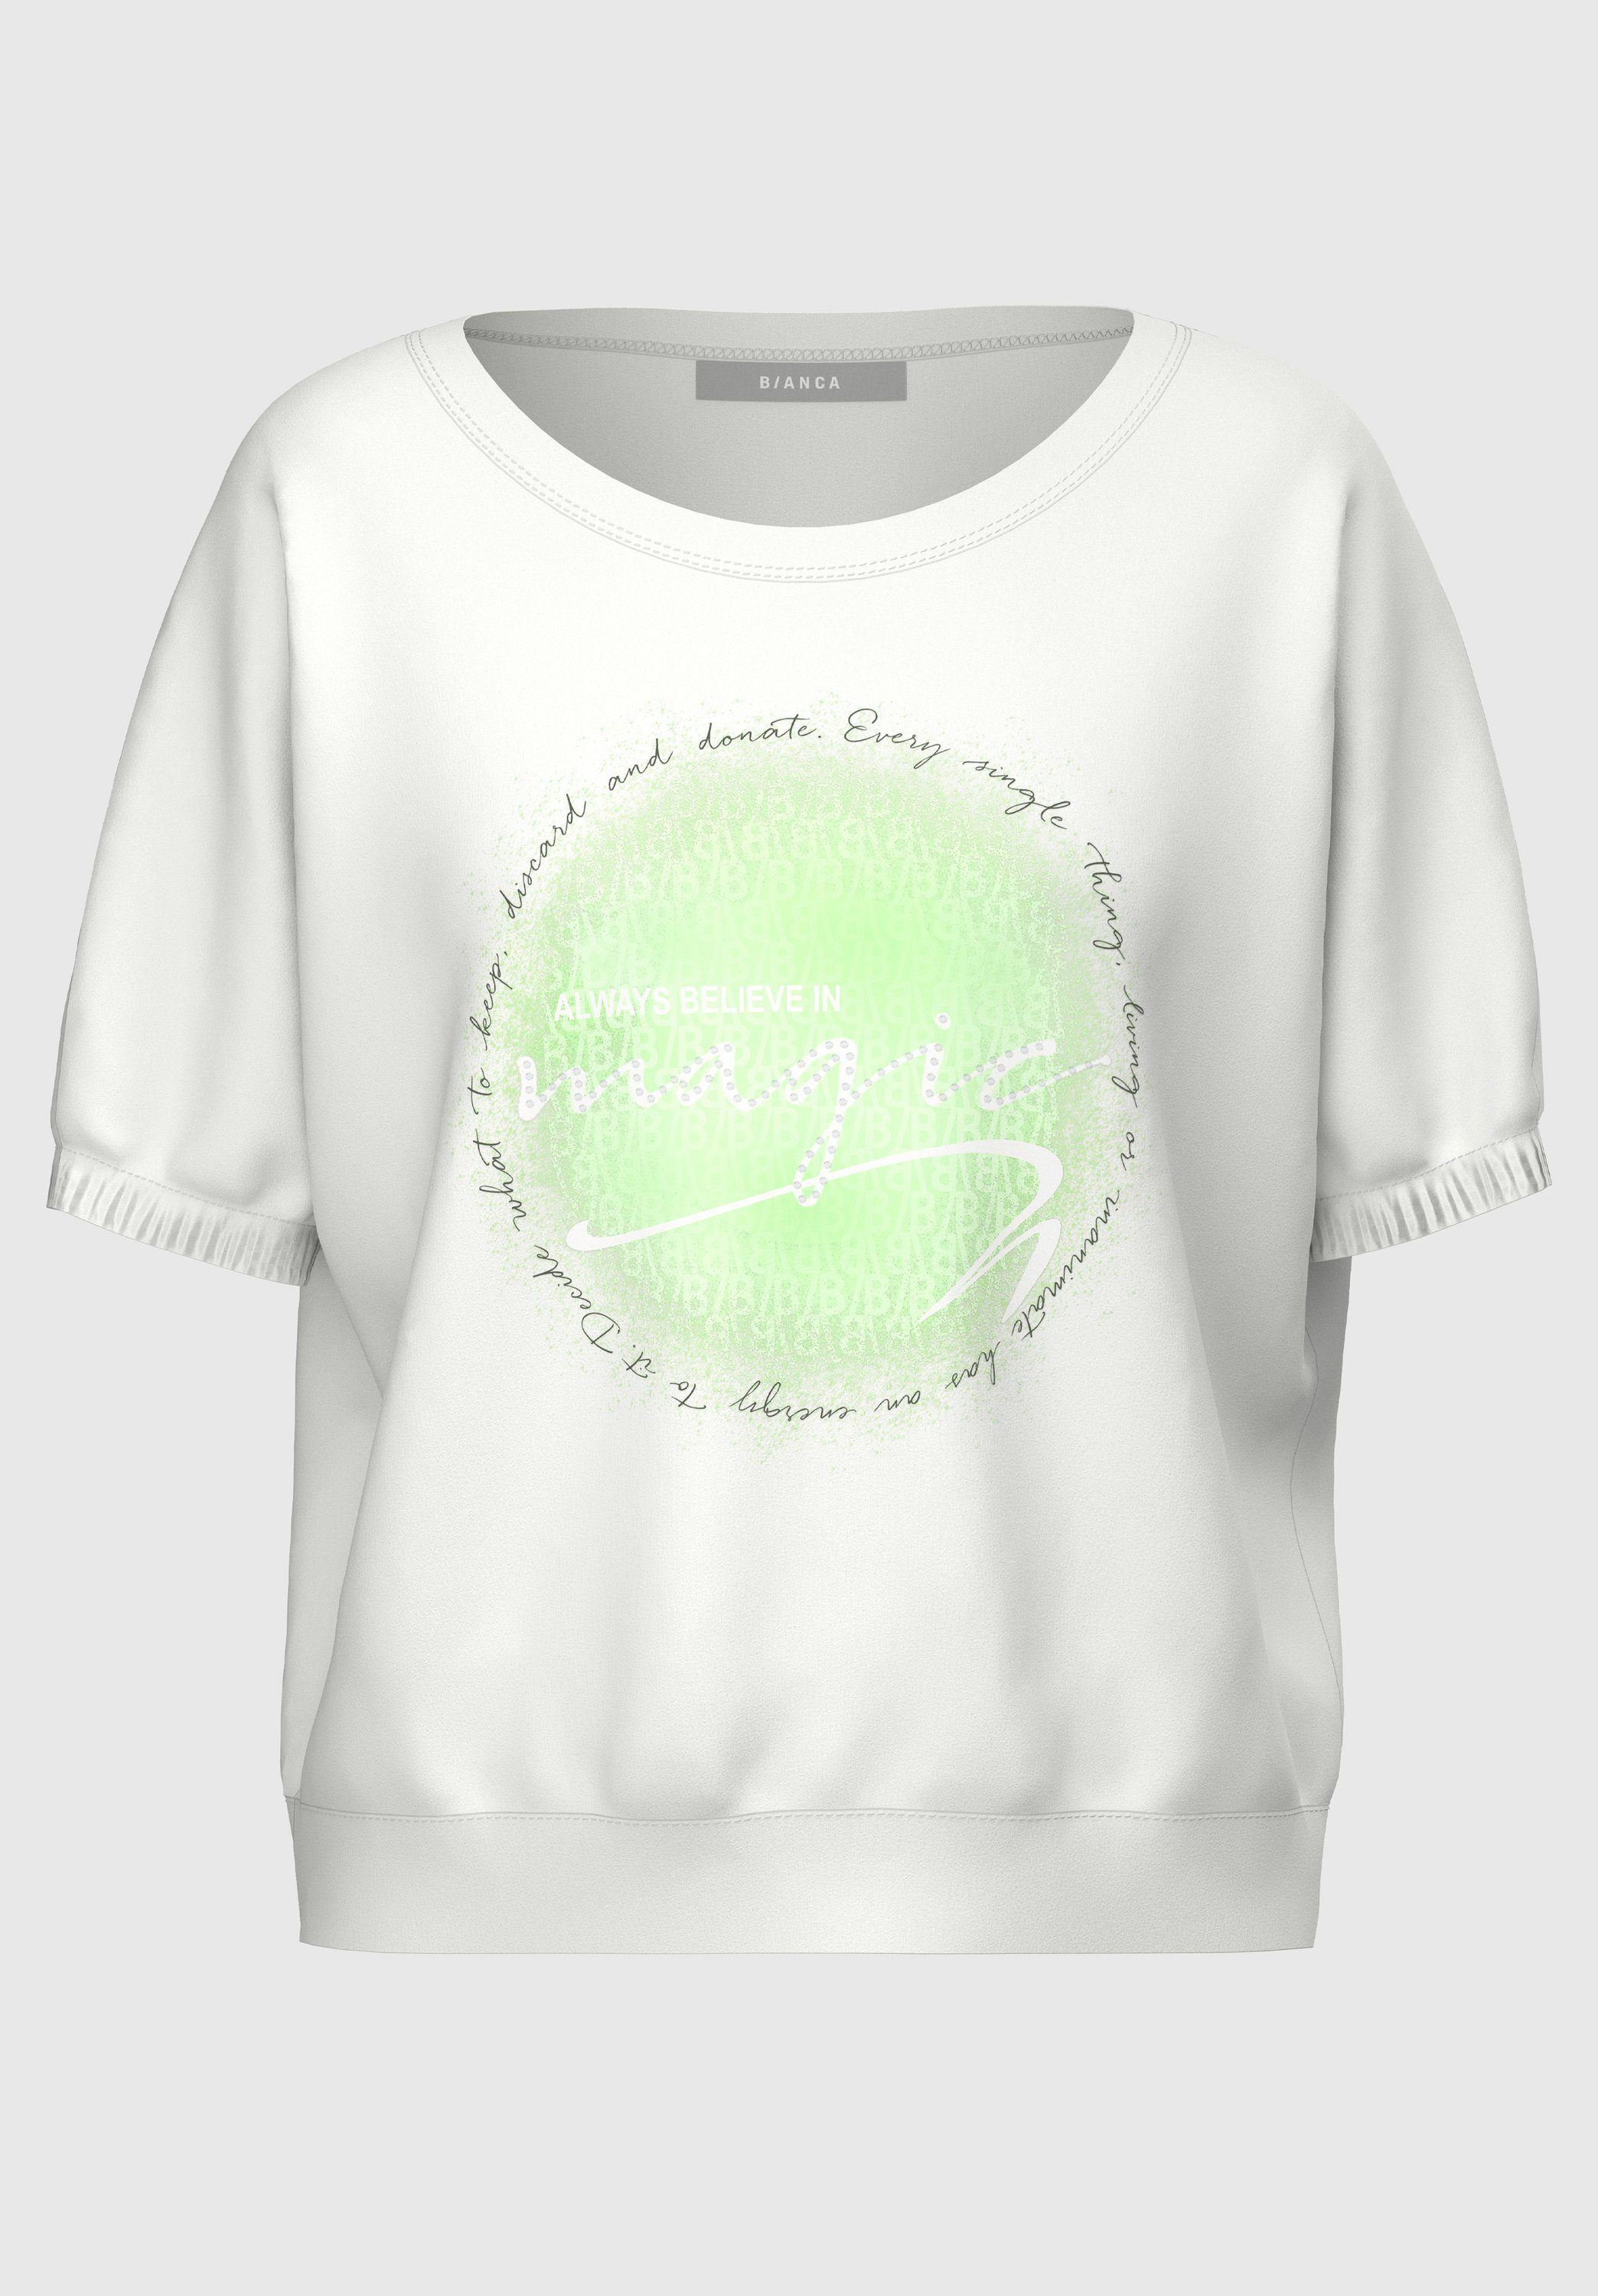 farbigem bianca Print-Shirt mit Frontmotiv CHRISTINA coolem Wording und